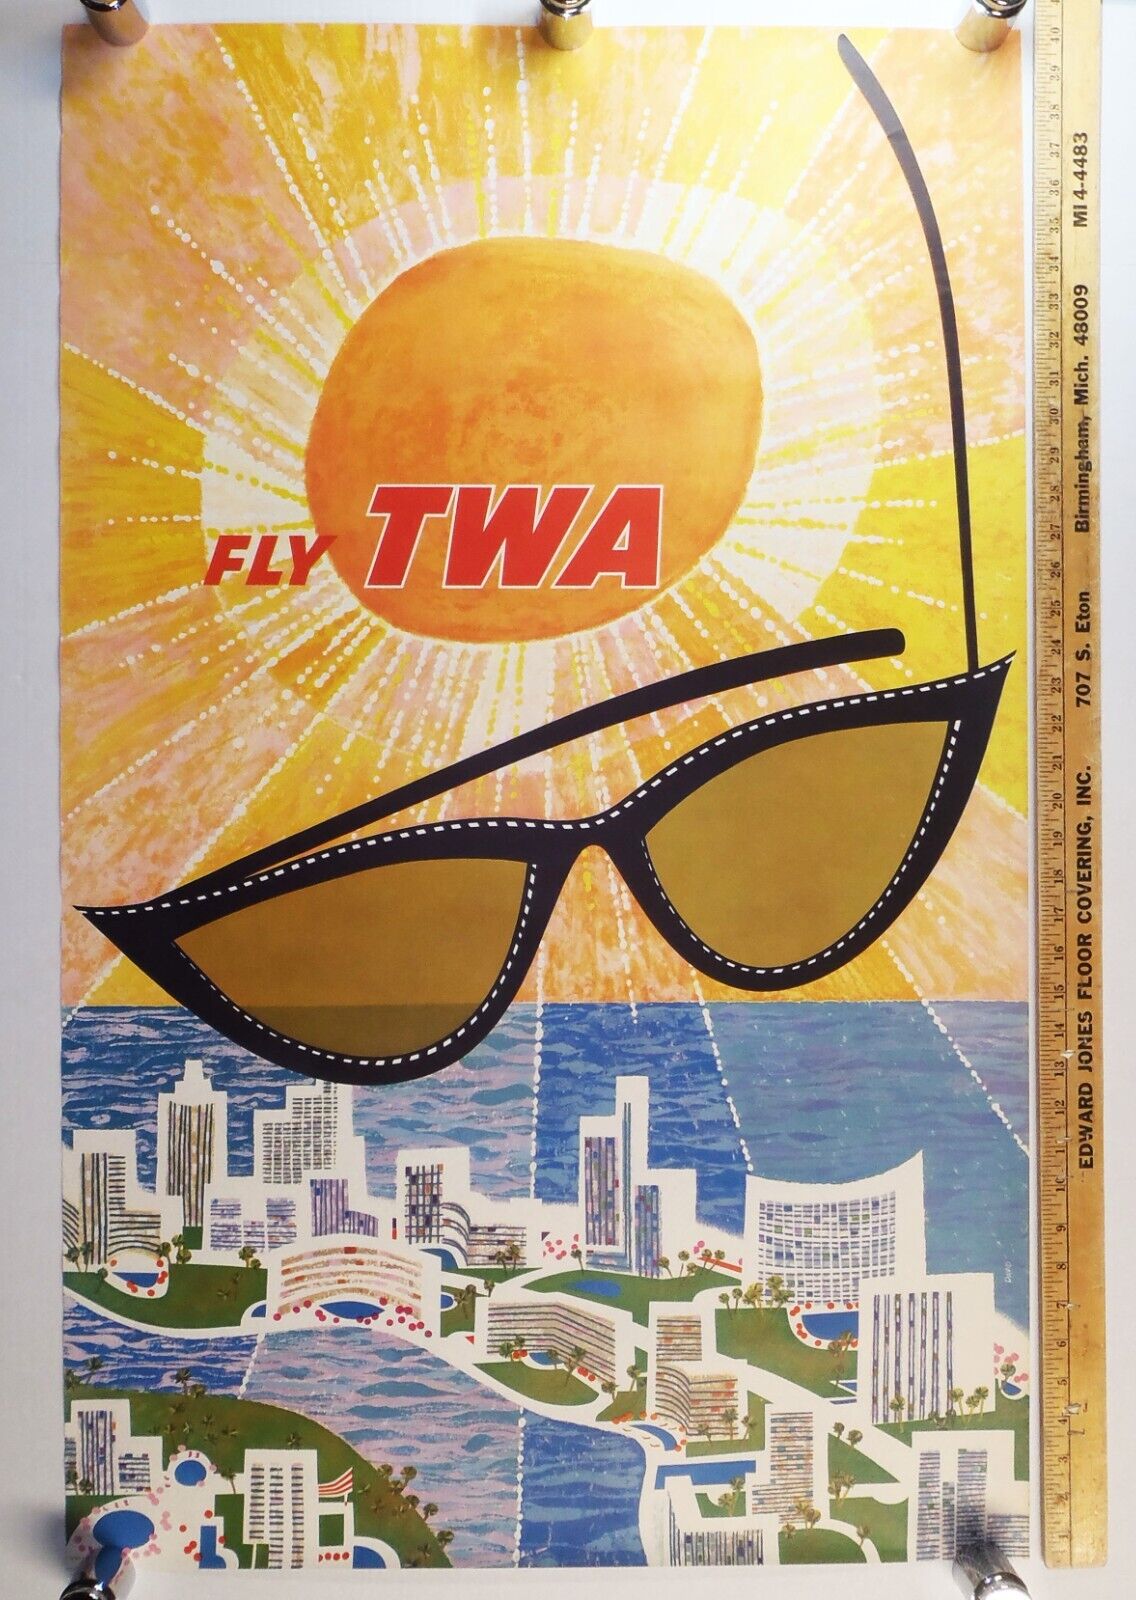 FLORIDA Original 1960 DAVID KLEIN FLY TWA # 1055 Travel Poster 25x40 NICE - NOS